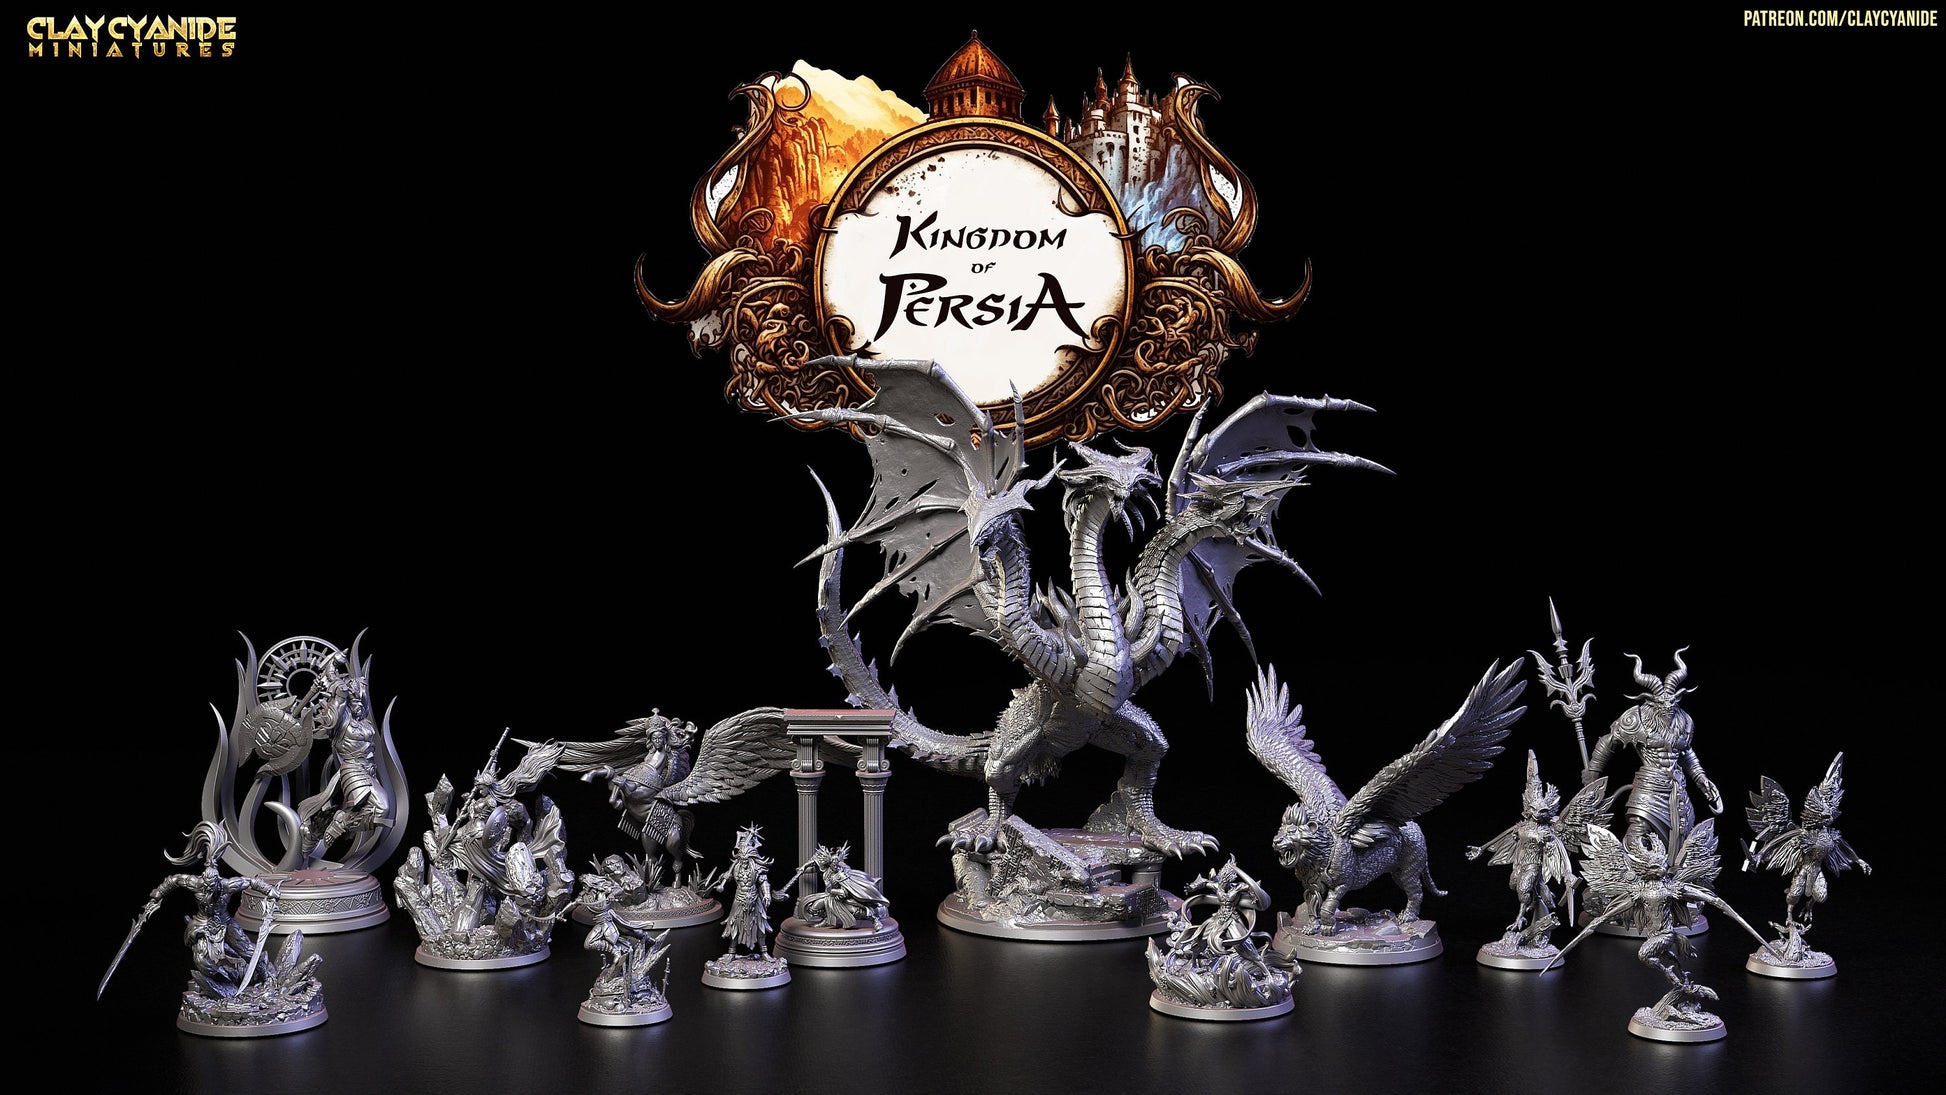 Zahhak - Clay Cyanide Printed Miniature | Dungeons & Dragons | Pathfinder | Tabletop